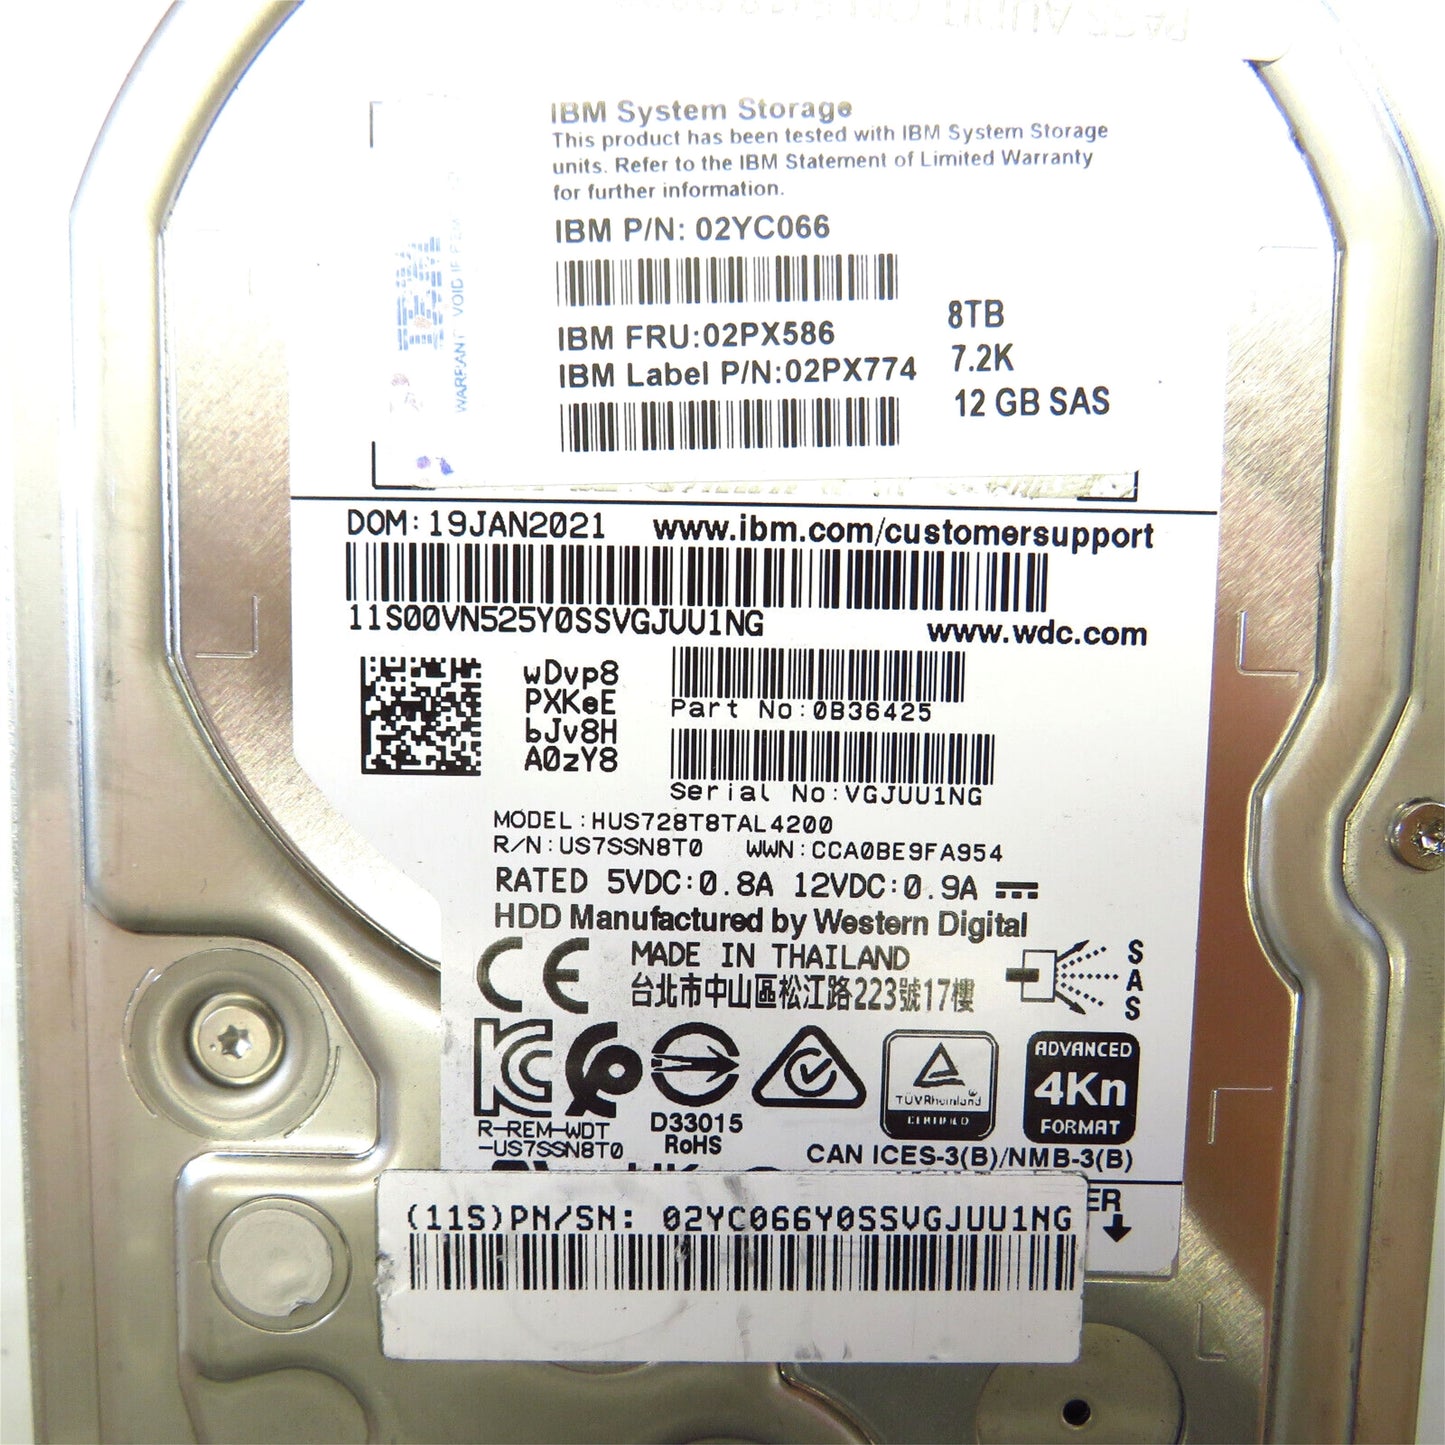 IBM 02PX586 3.5" 8TB 7200RPM SAS 12Gb/s Hard Disk Drive (HDD), Silver (Refurbished)